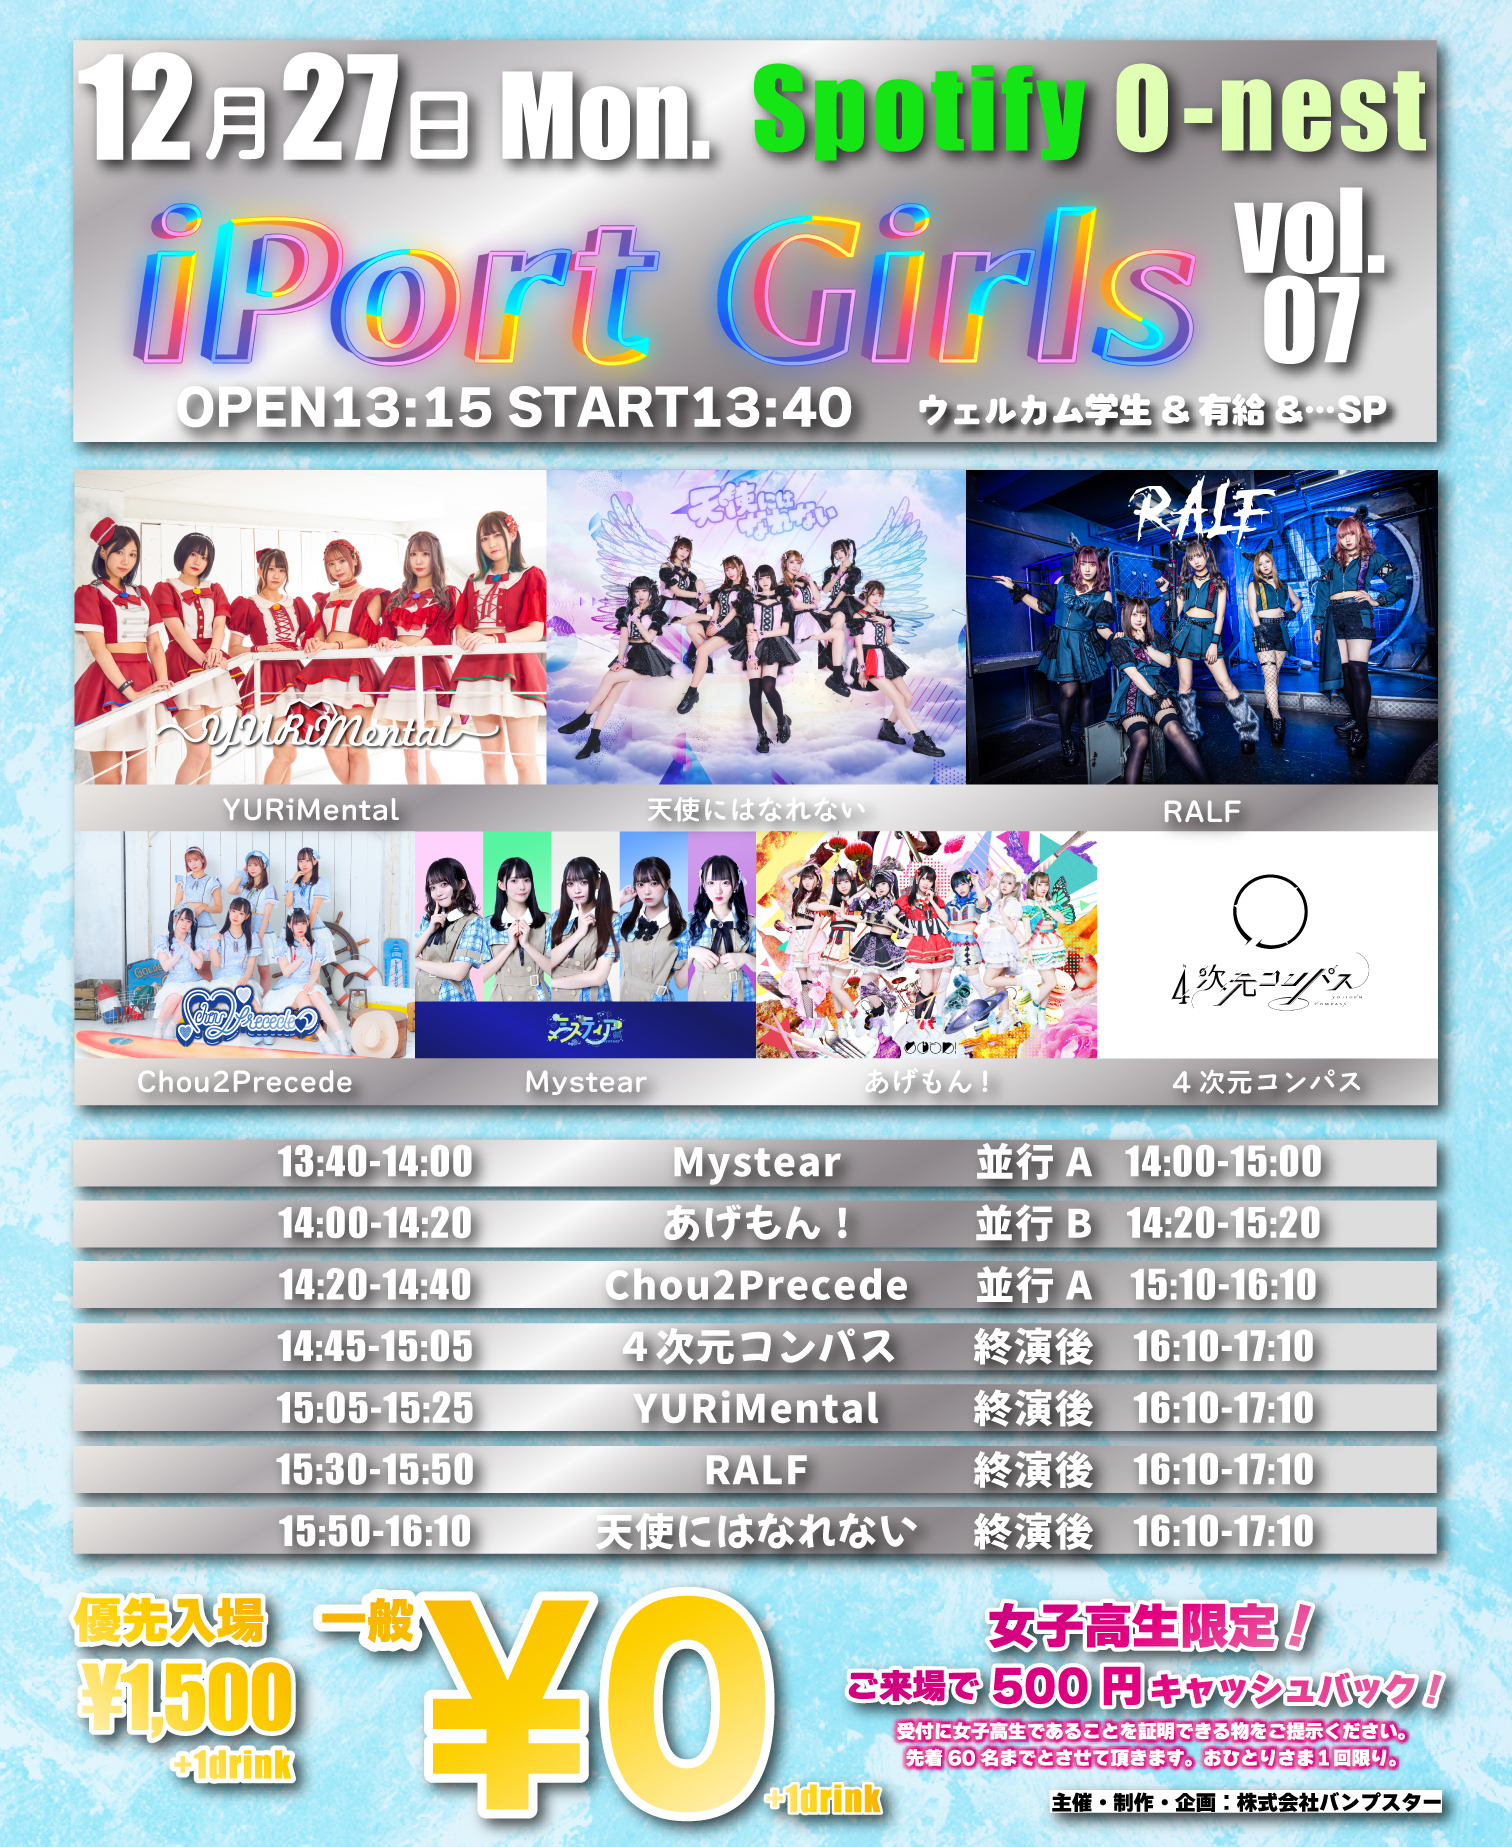 iPort Girls vol.7 ウェルカム学生&有給&…SP